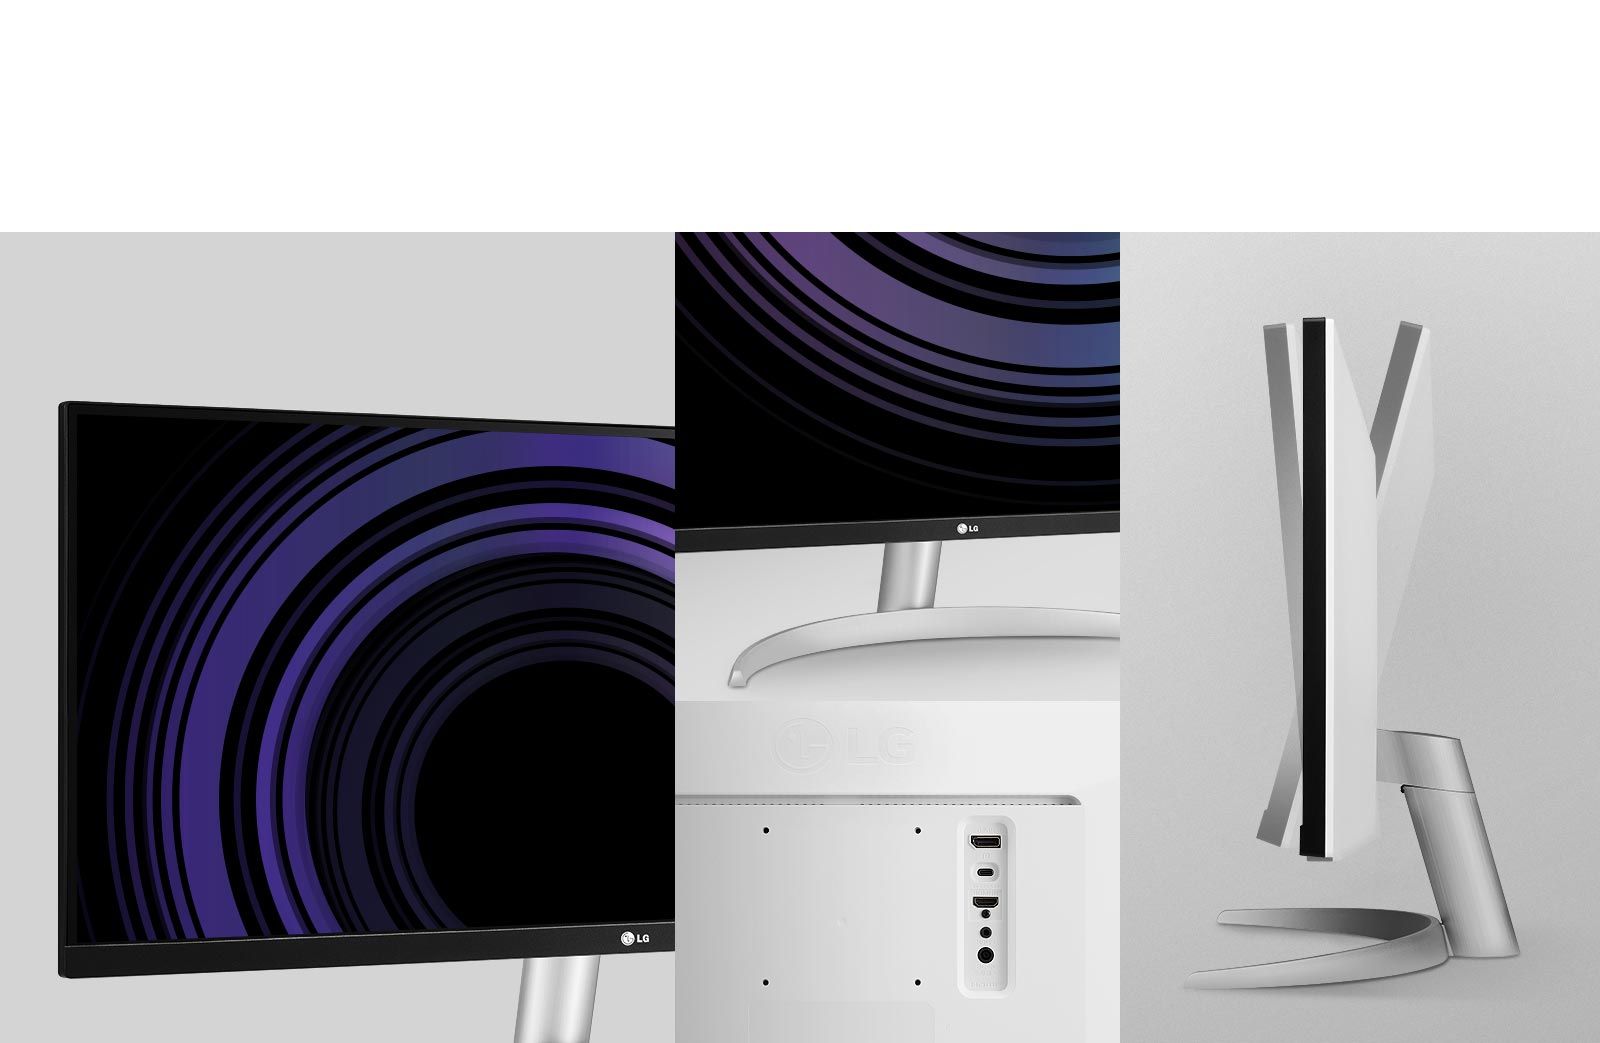 mnt-ultrawide-29wq600-14-1-ergonomic-design-desktop